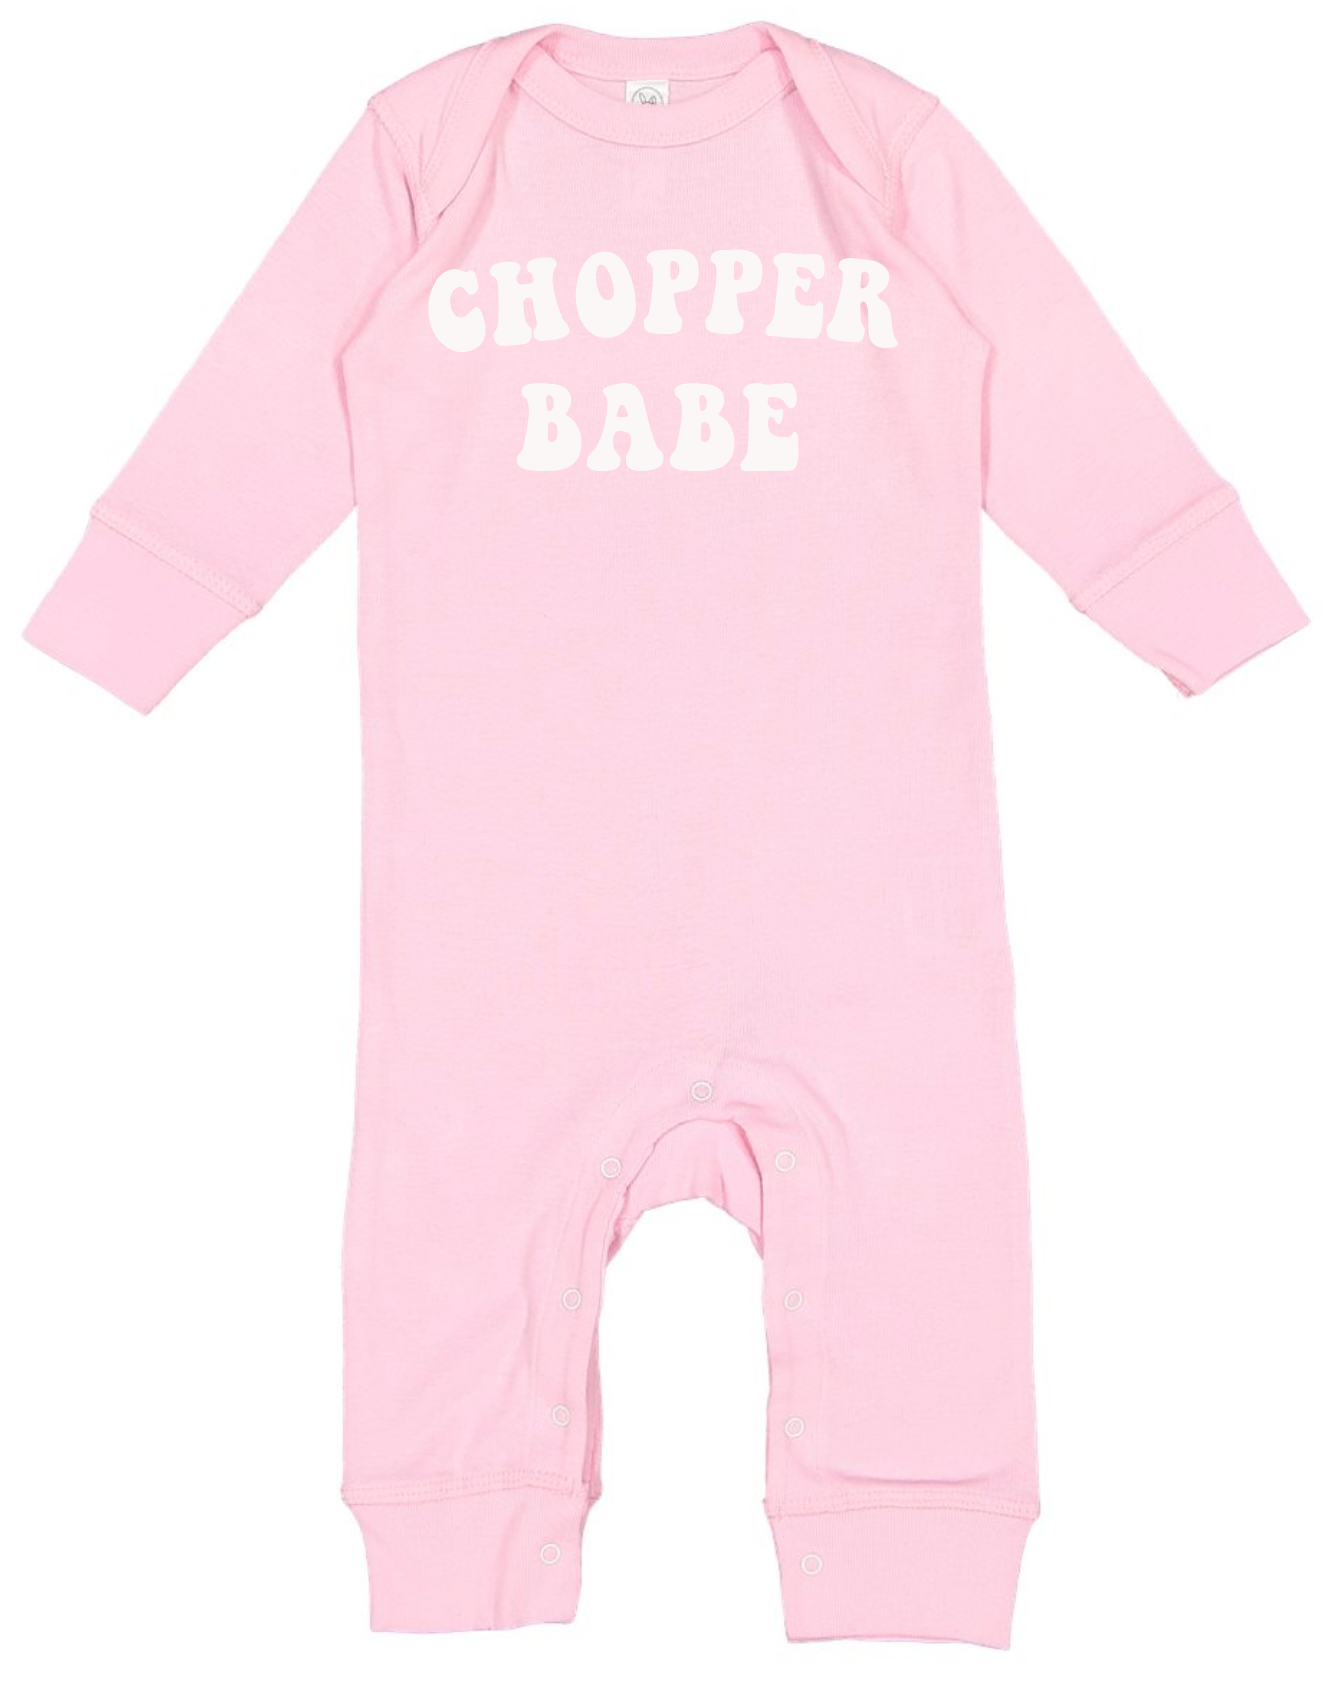 CHOPPER BABE LONG LEGGED BODYSUIT